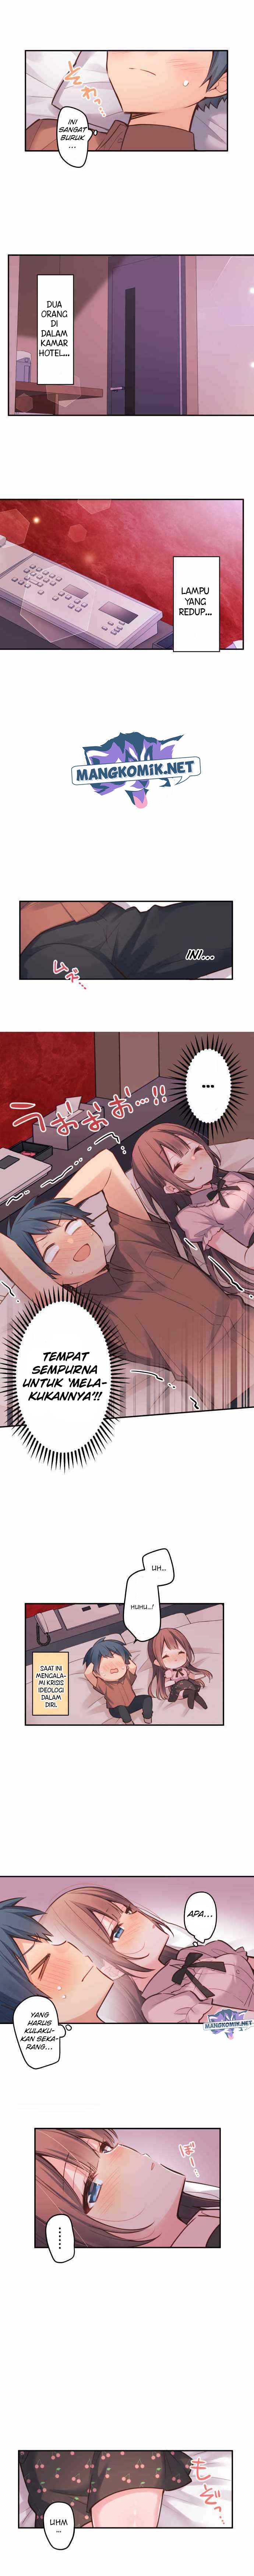 Waka-chan Is Flirty Again Chapter 11